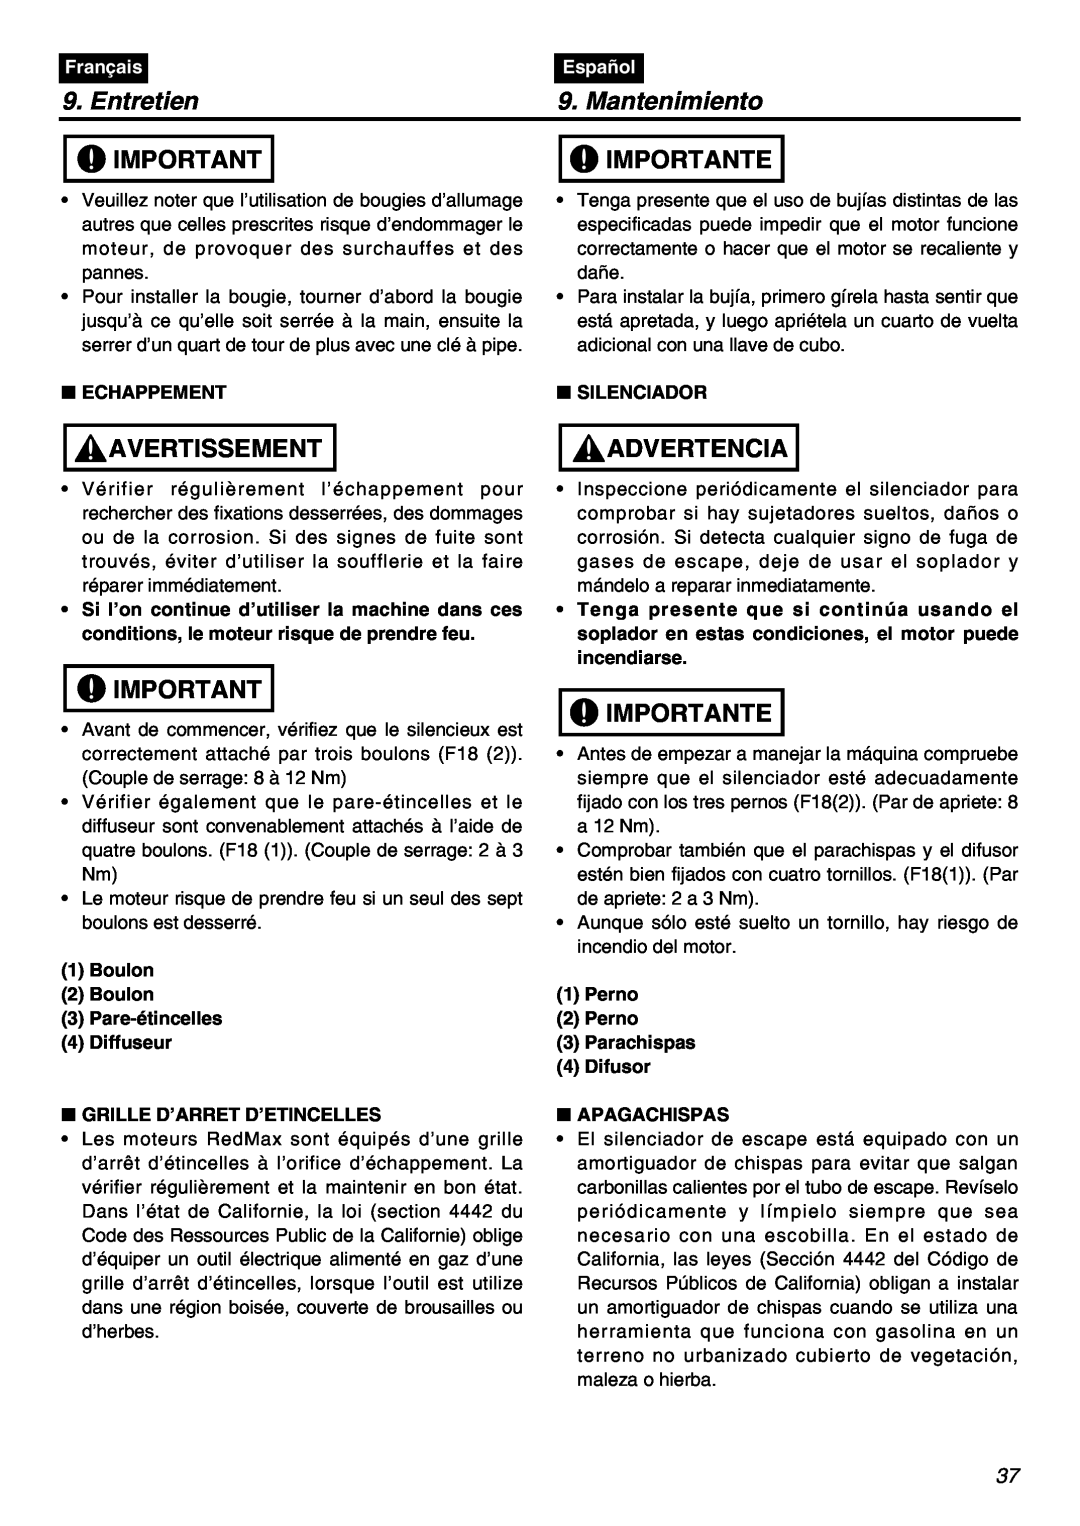 RedMax EBZ8001RH manual Entretien, Mantenimiento, Importante, Avertissement, Advertencia, Français, Español 